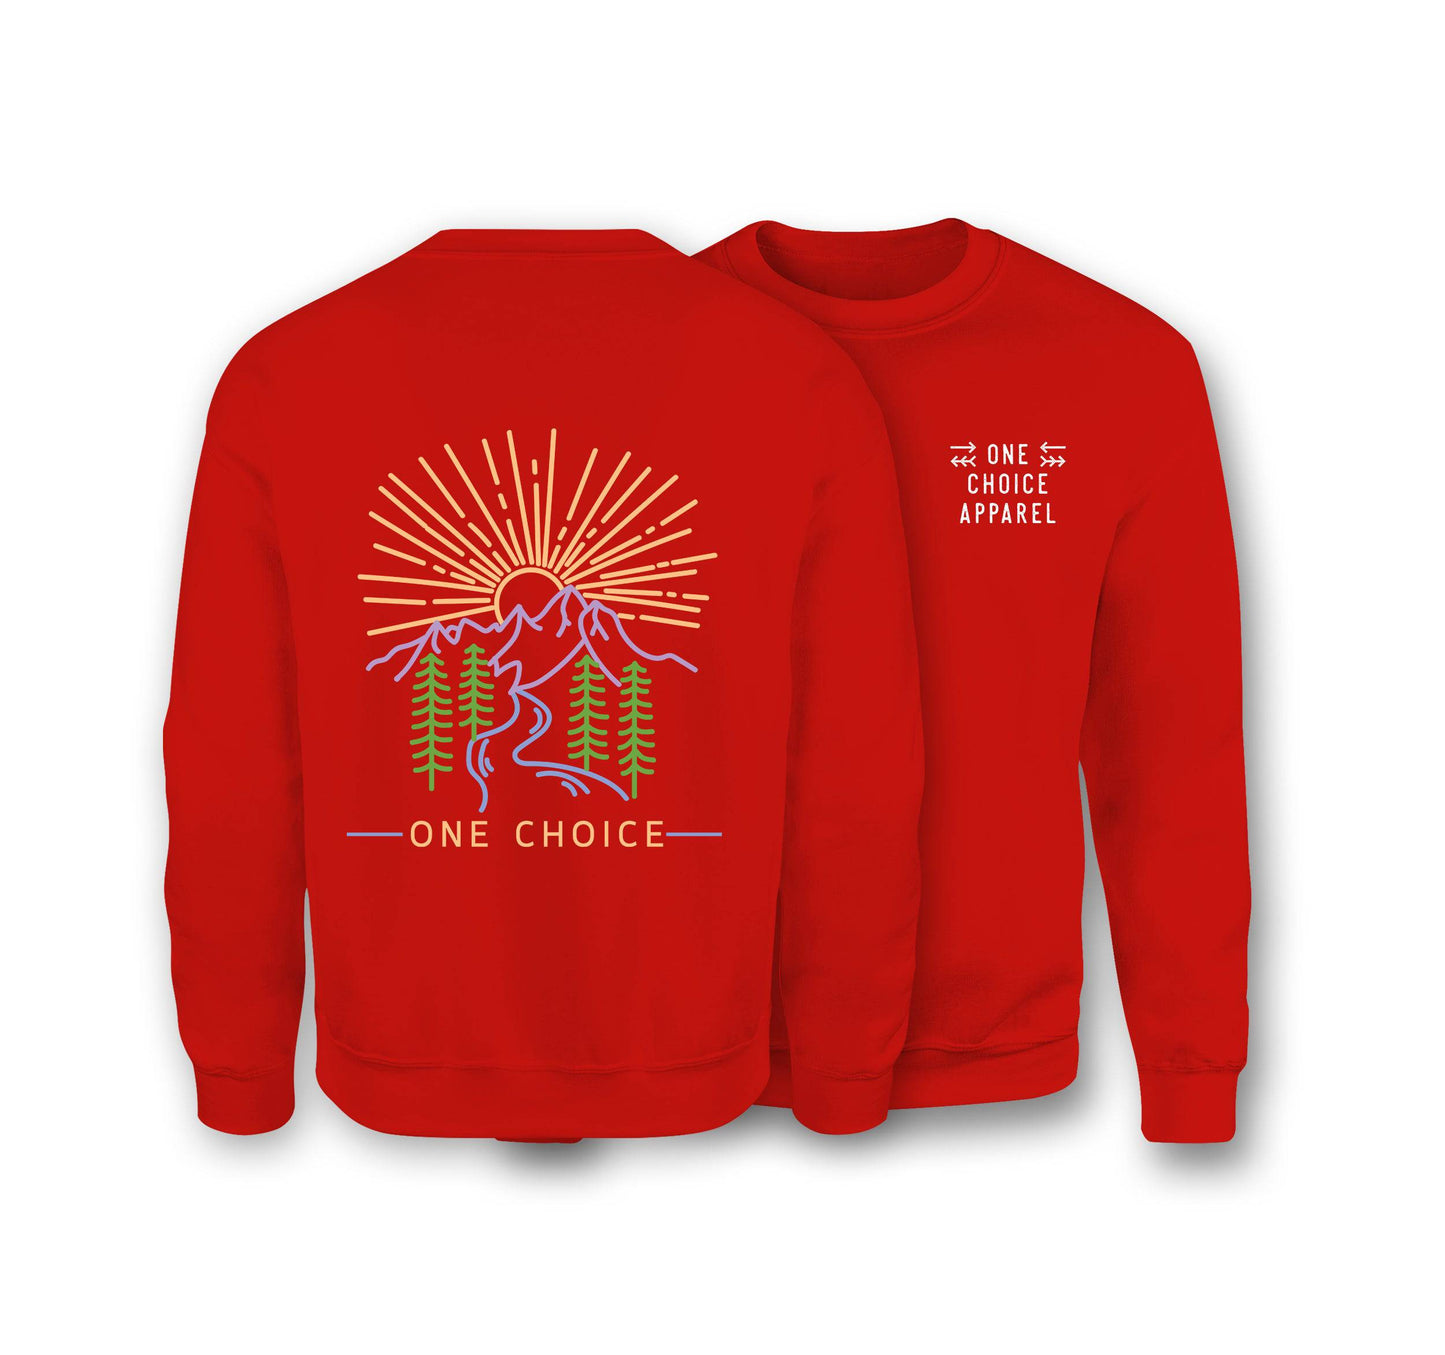 Sunrise Scene Sweatshirt - Organic Cotton Sweatshirt - One Choice Apparel